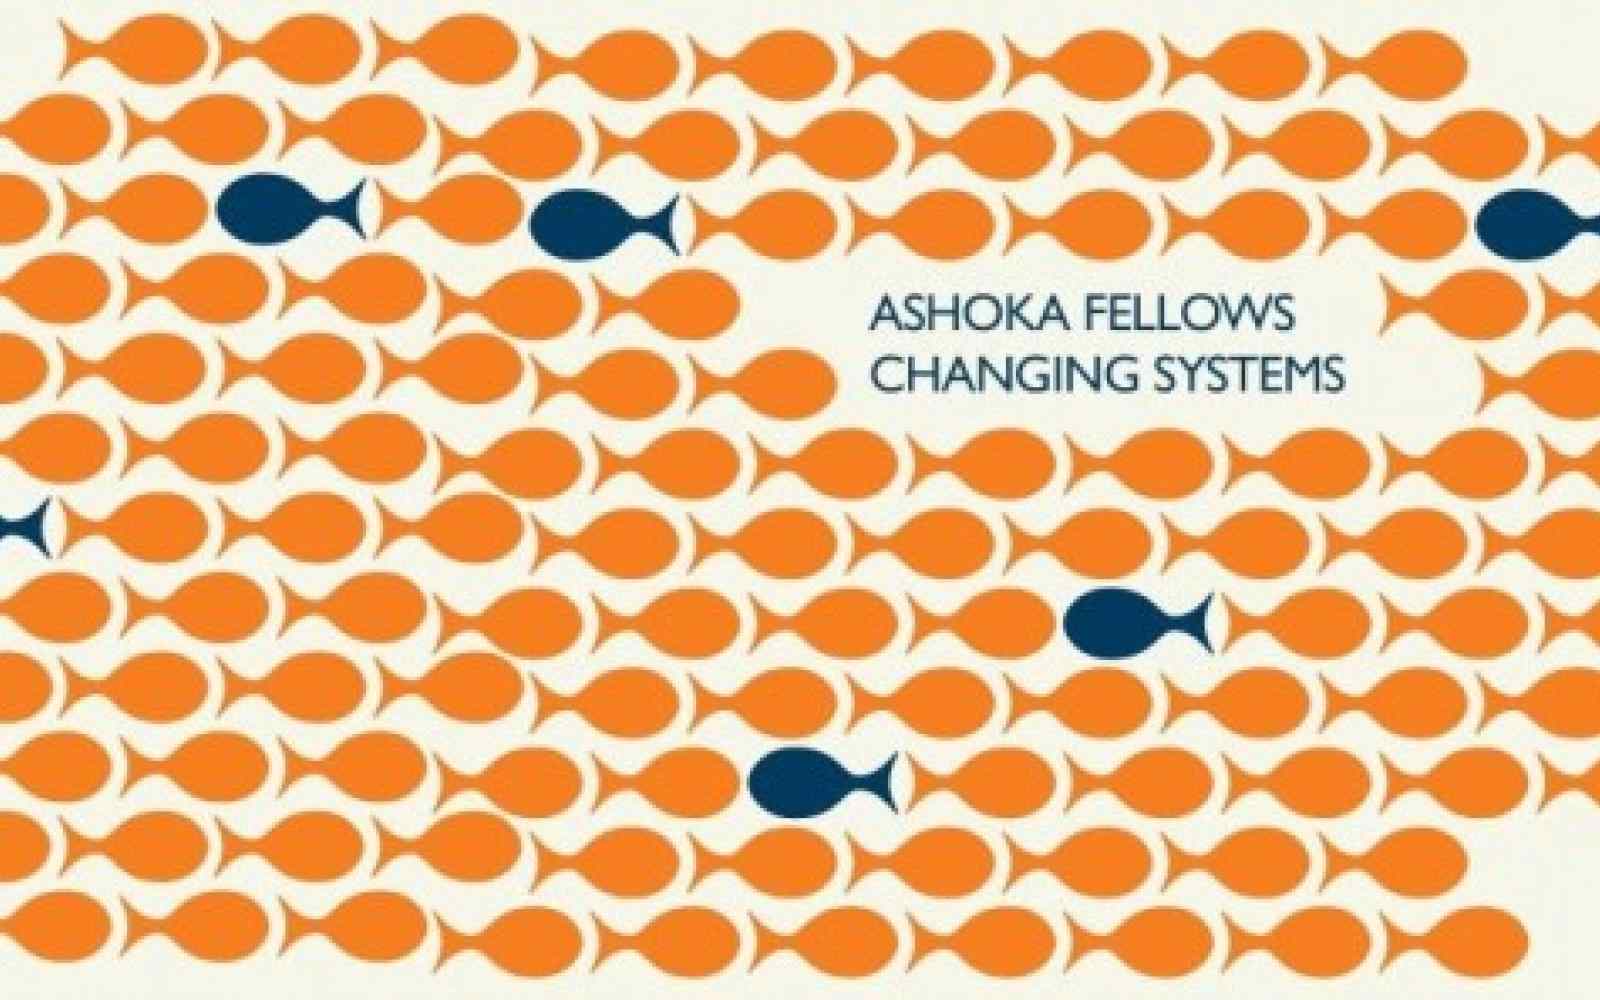 Ashoka Fellows